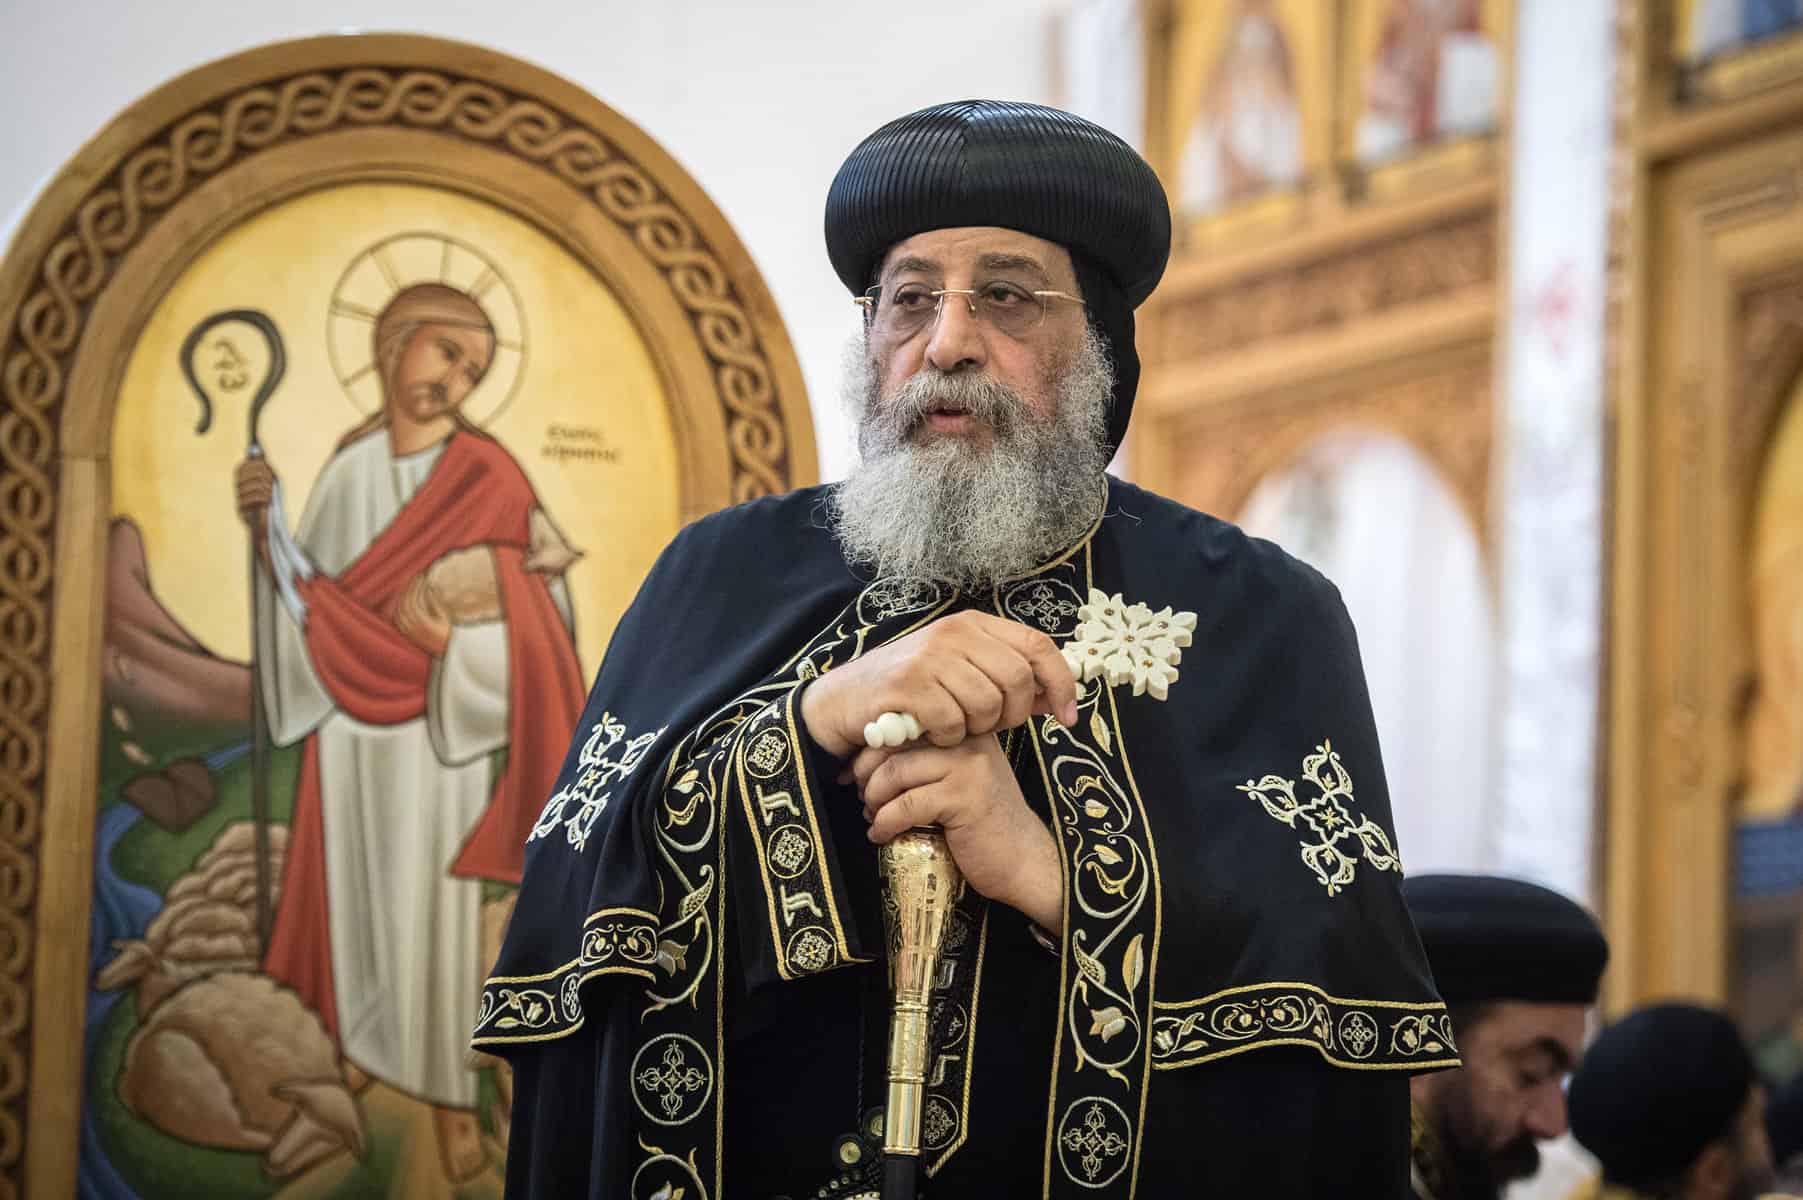 A Coptic Orthodox clergyman with grey beard.